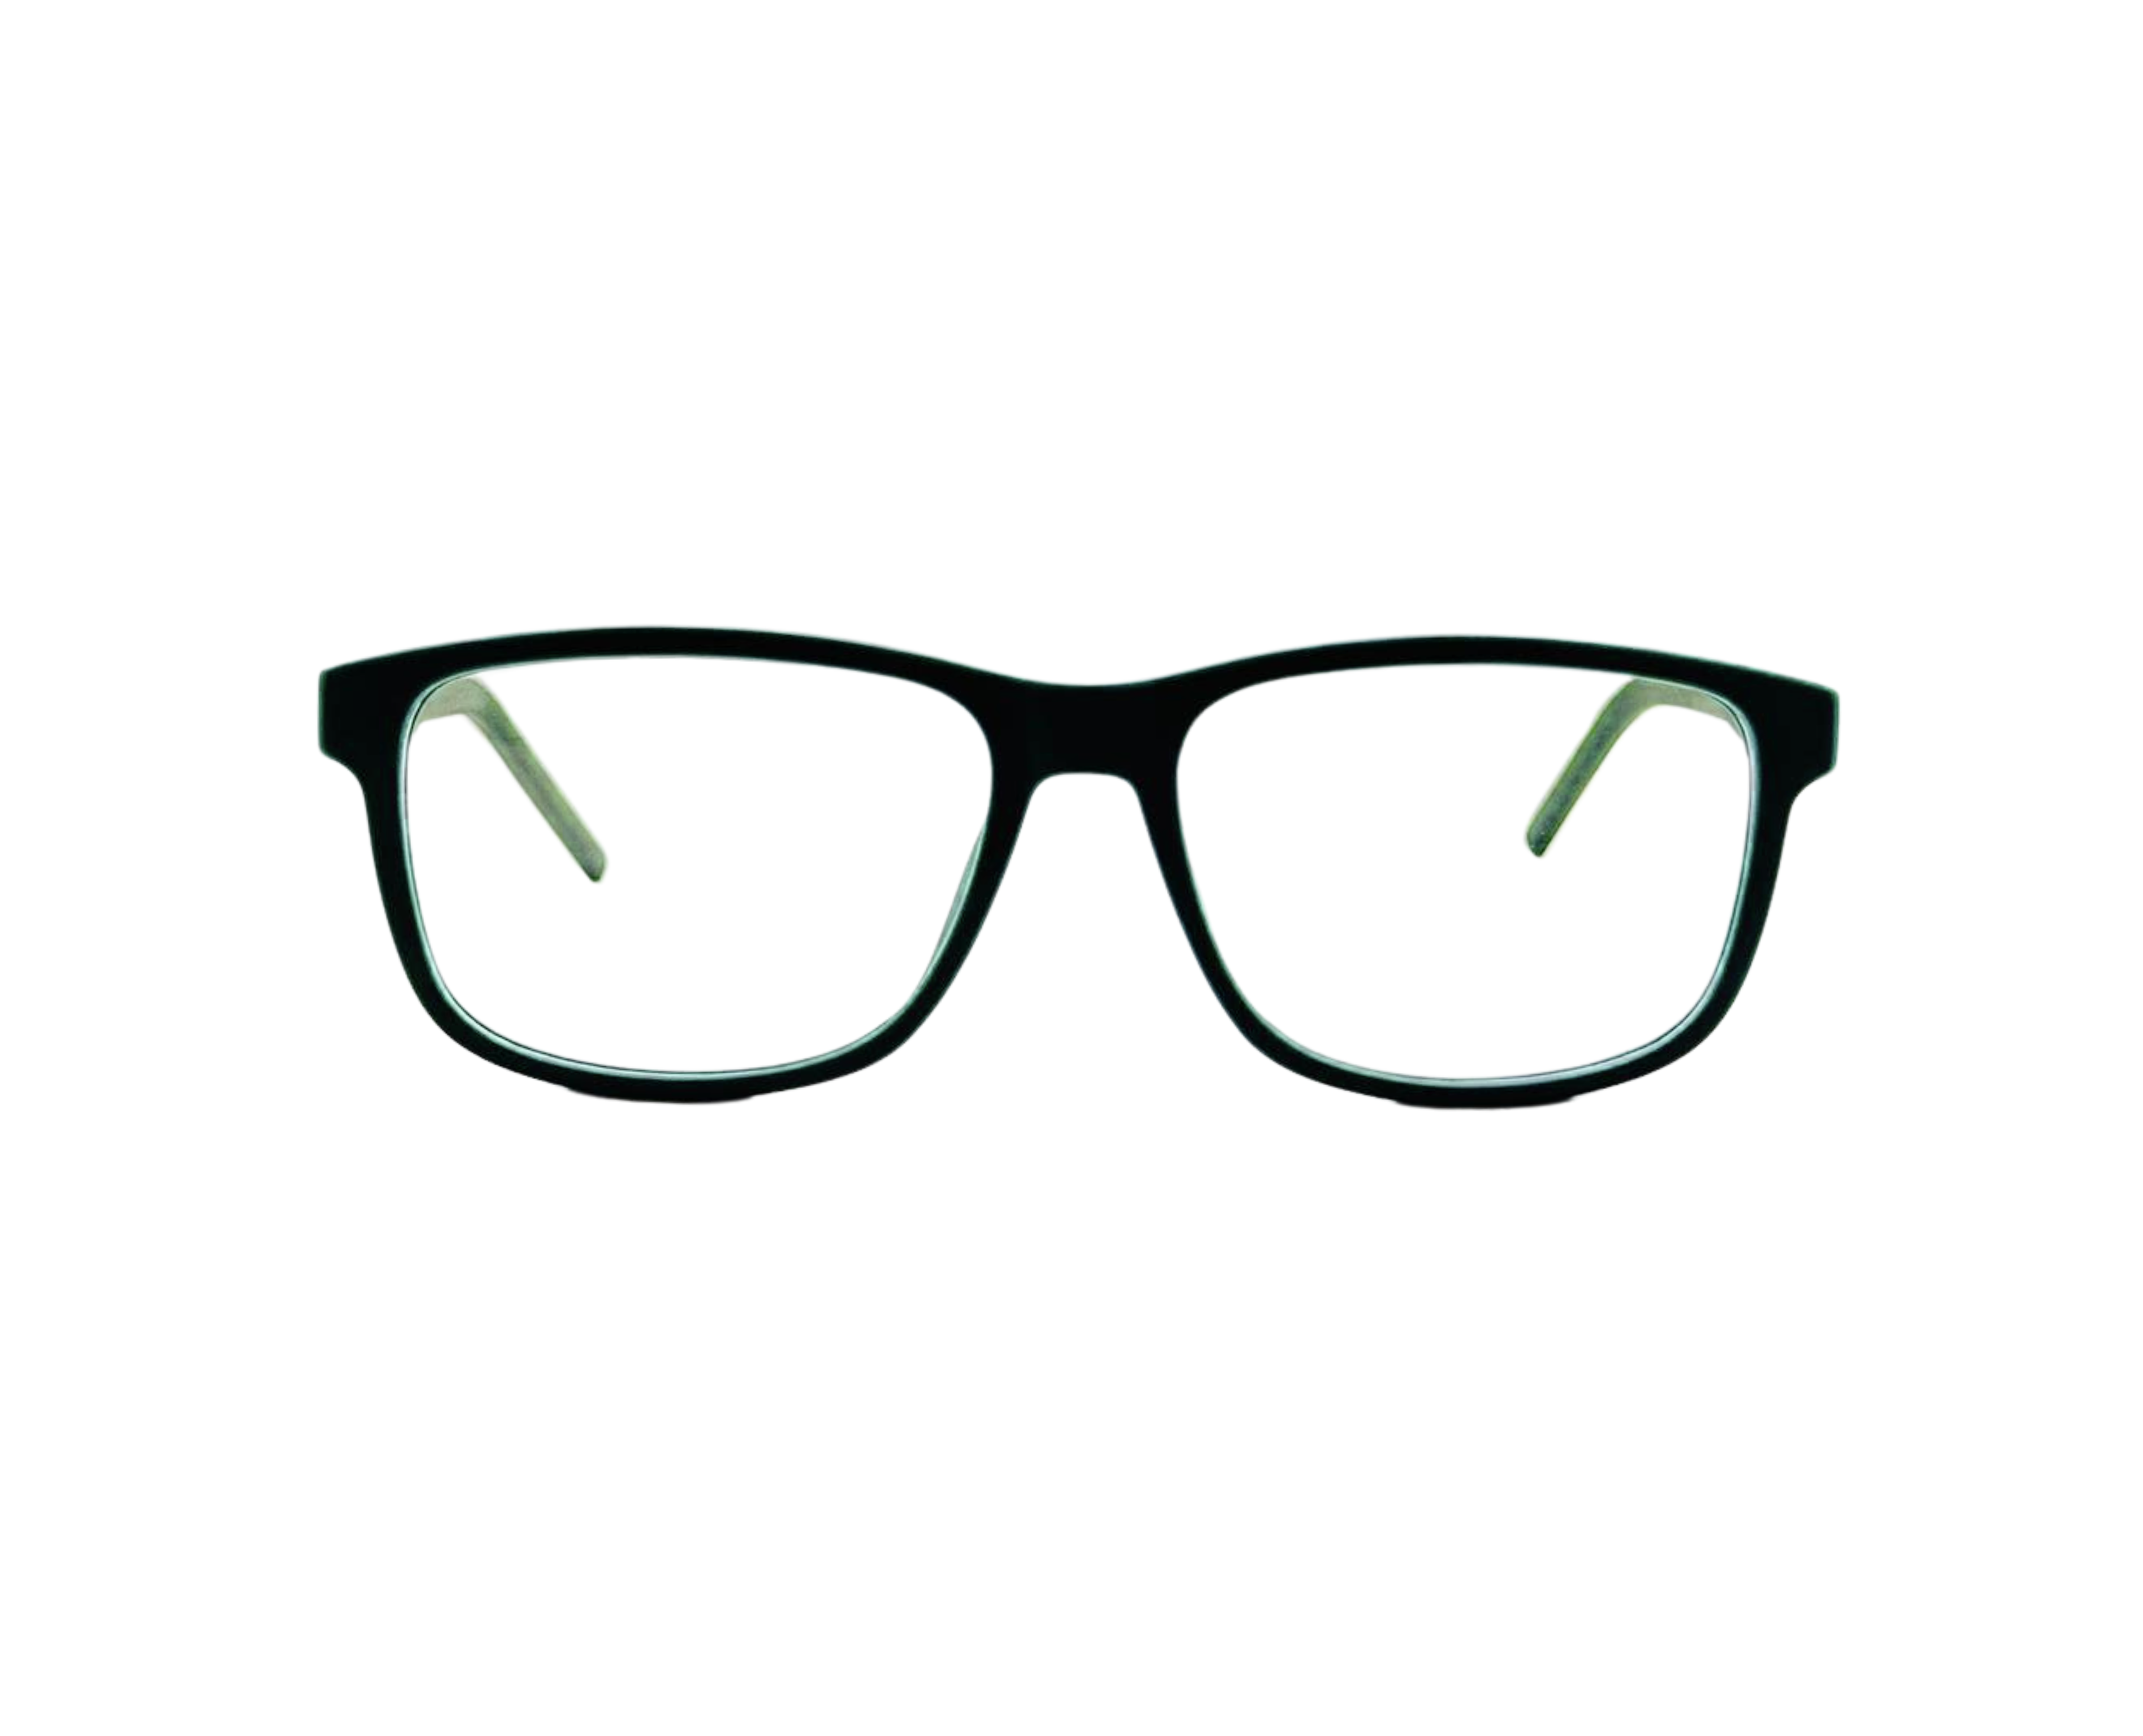 NS Luxury - 2866 - Green - Eyeglasses